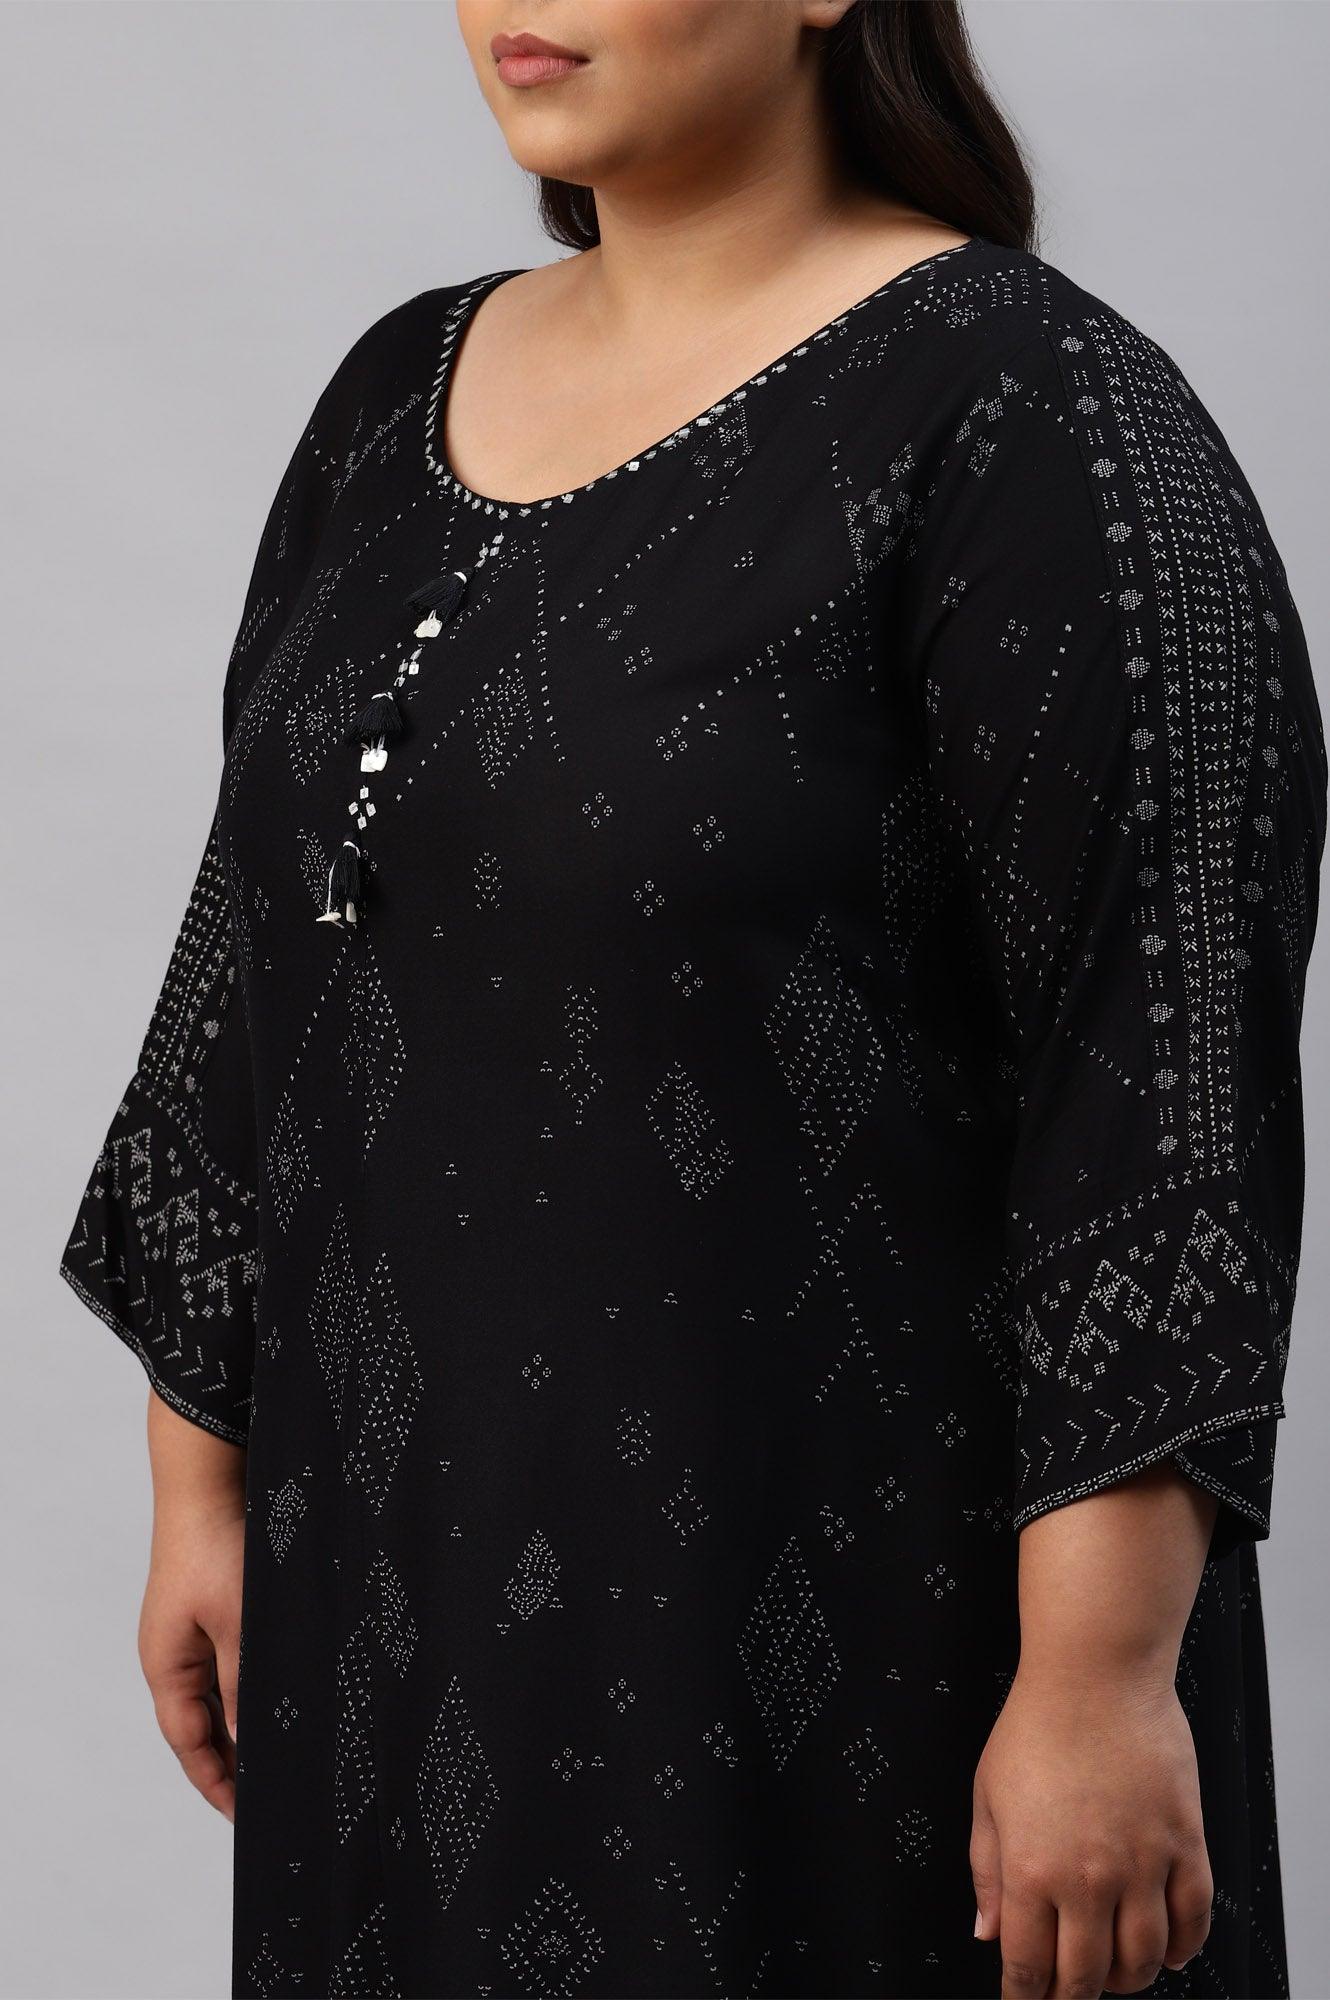 Plus Size Black Printed A-Line kurta With Cowl Hemline - wforwoman